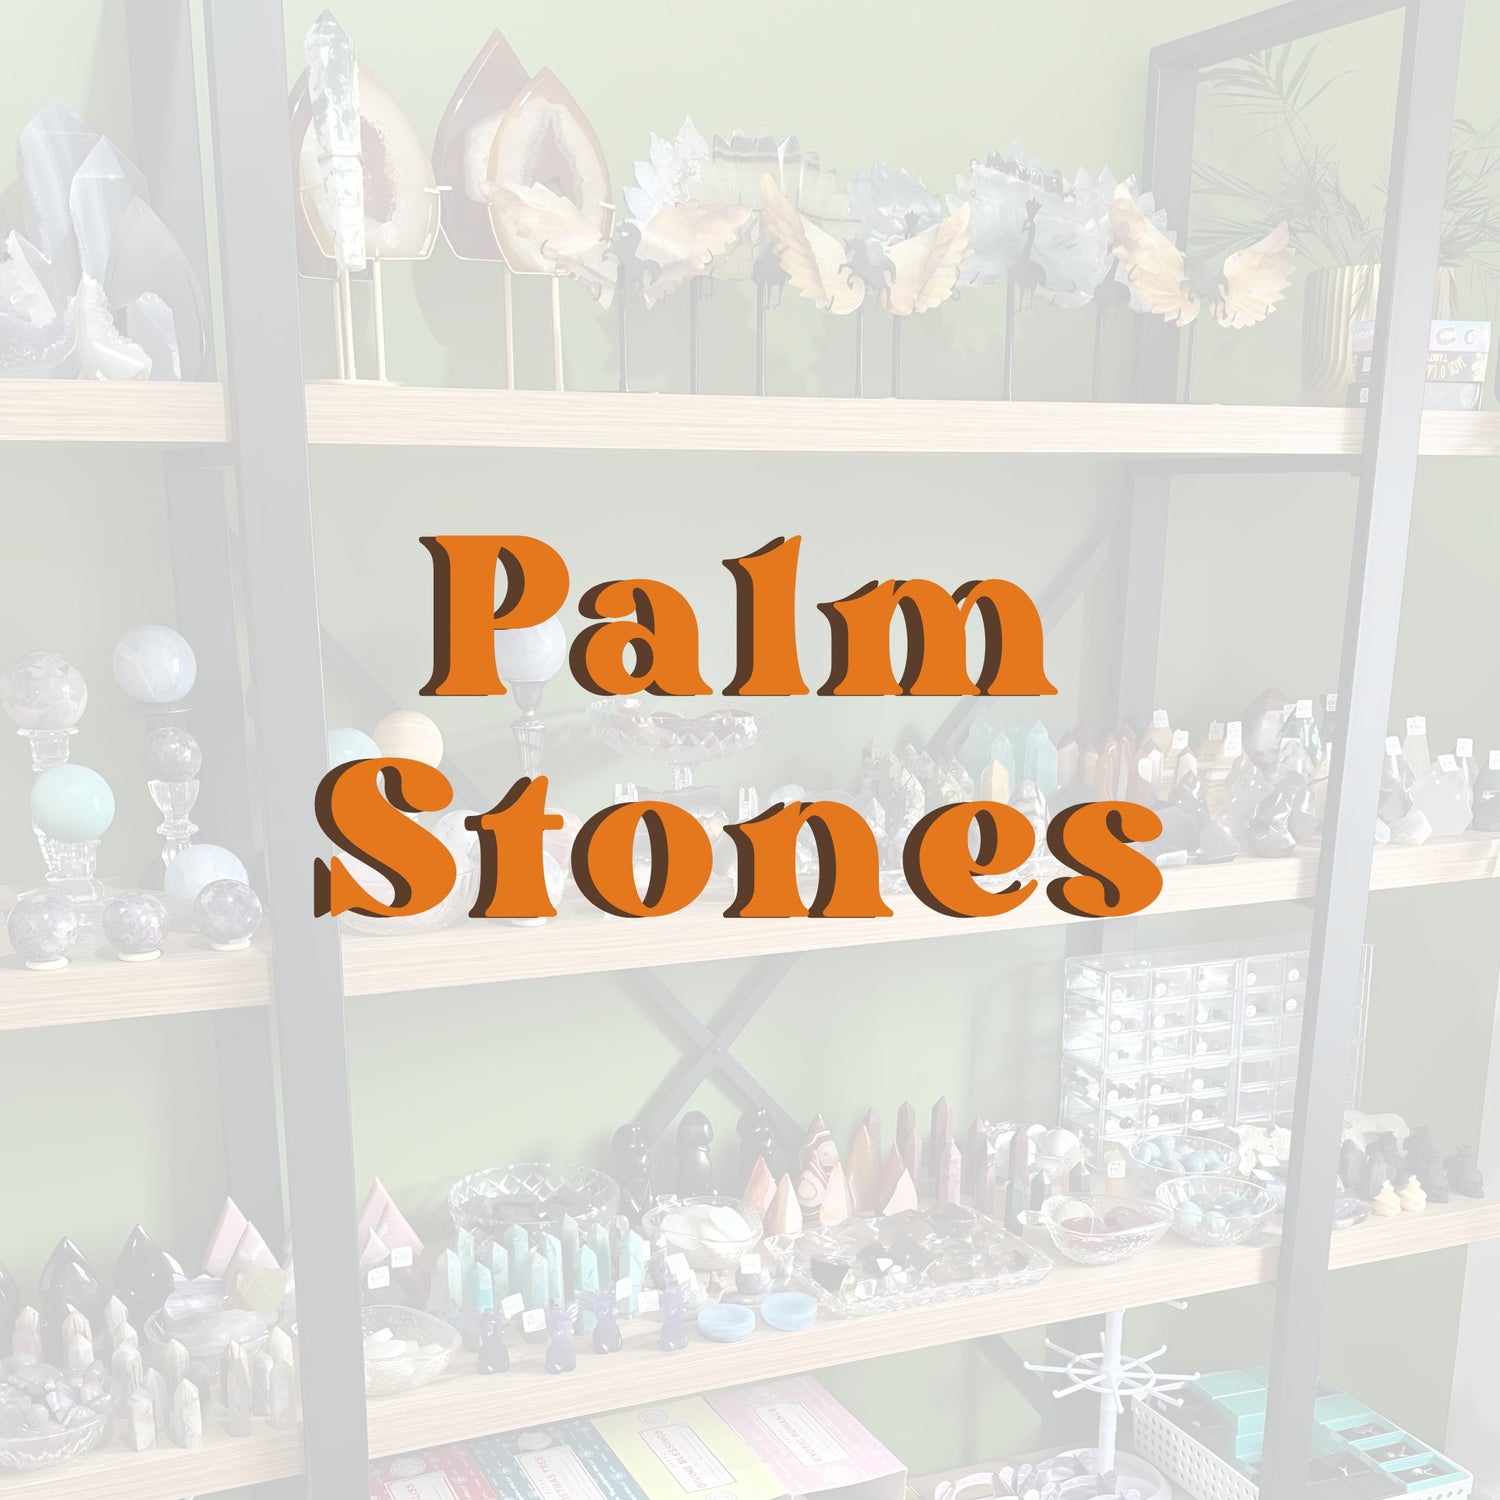 Palm Stones